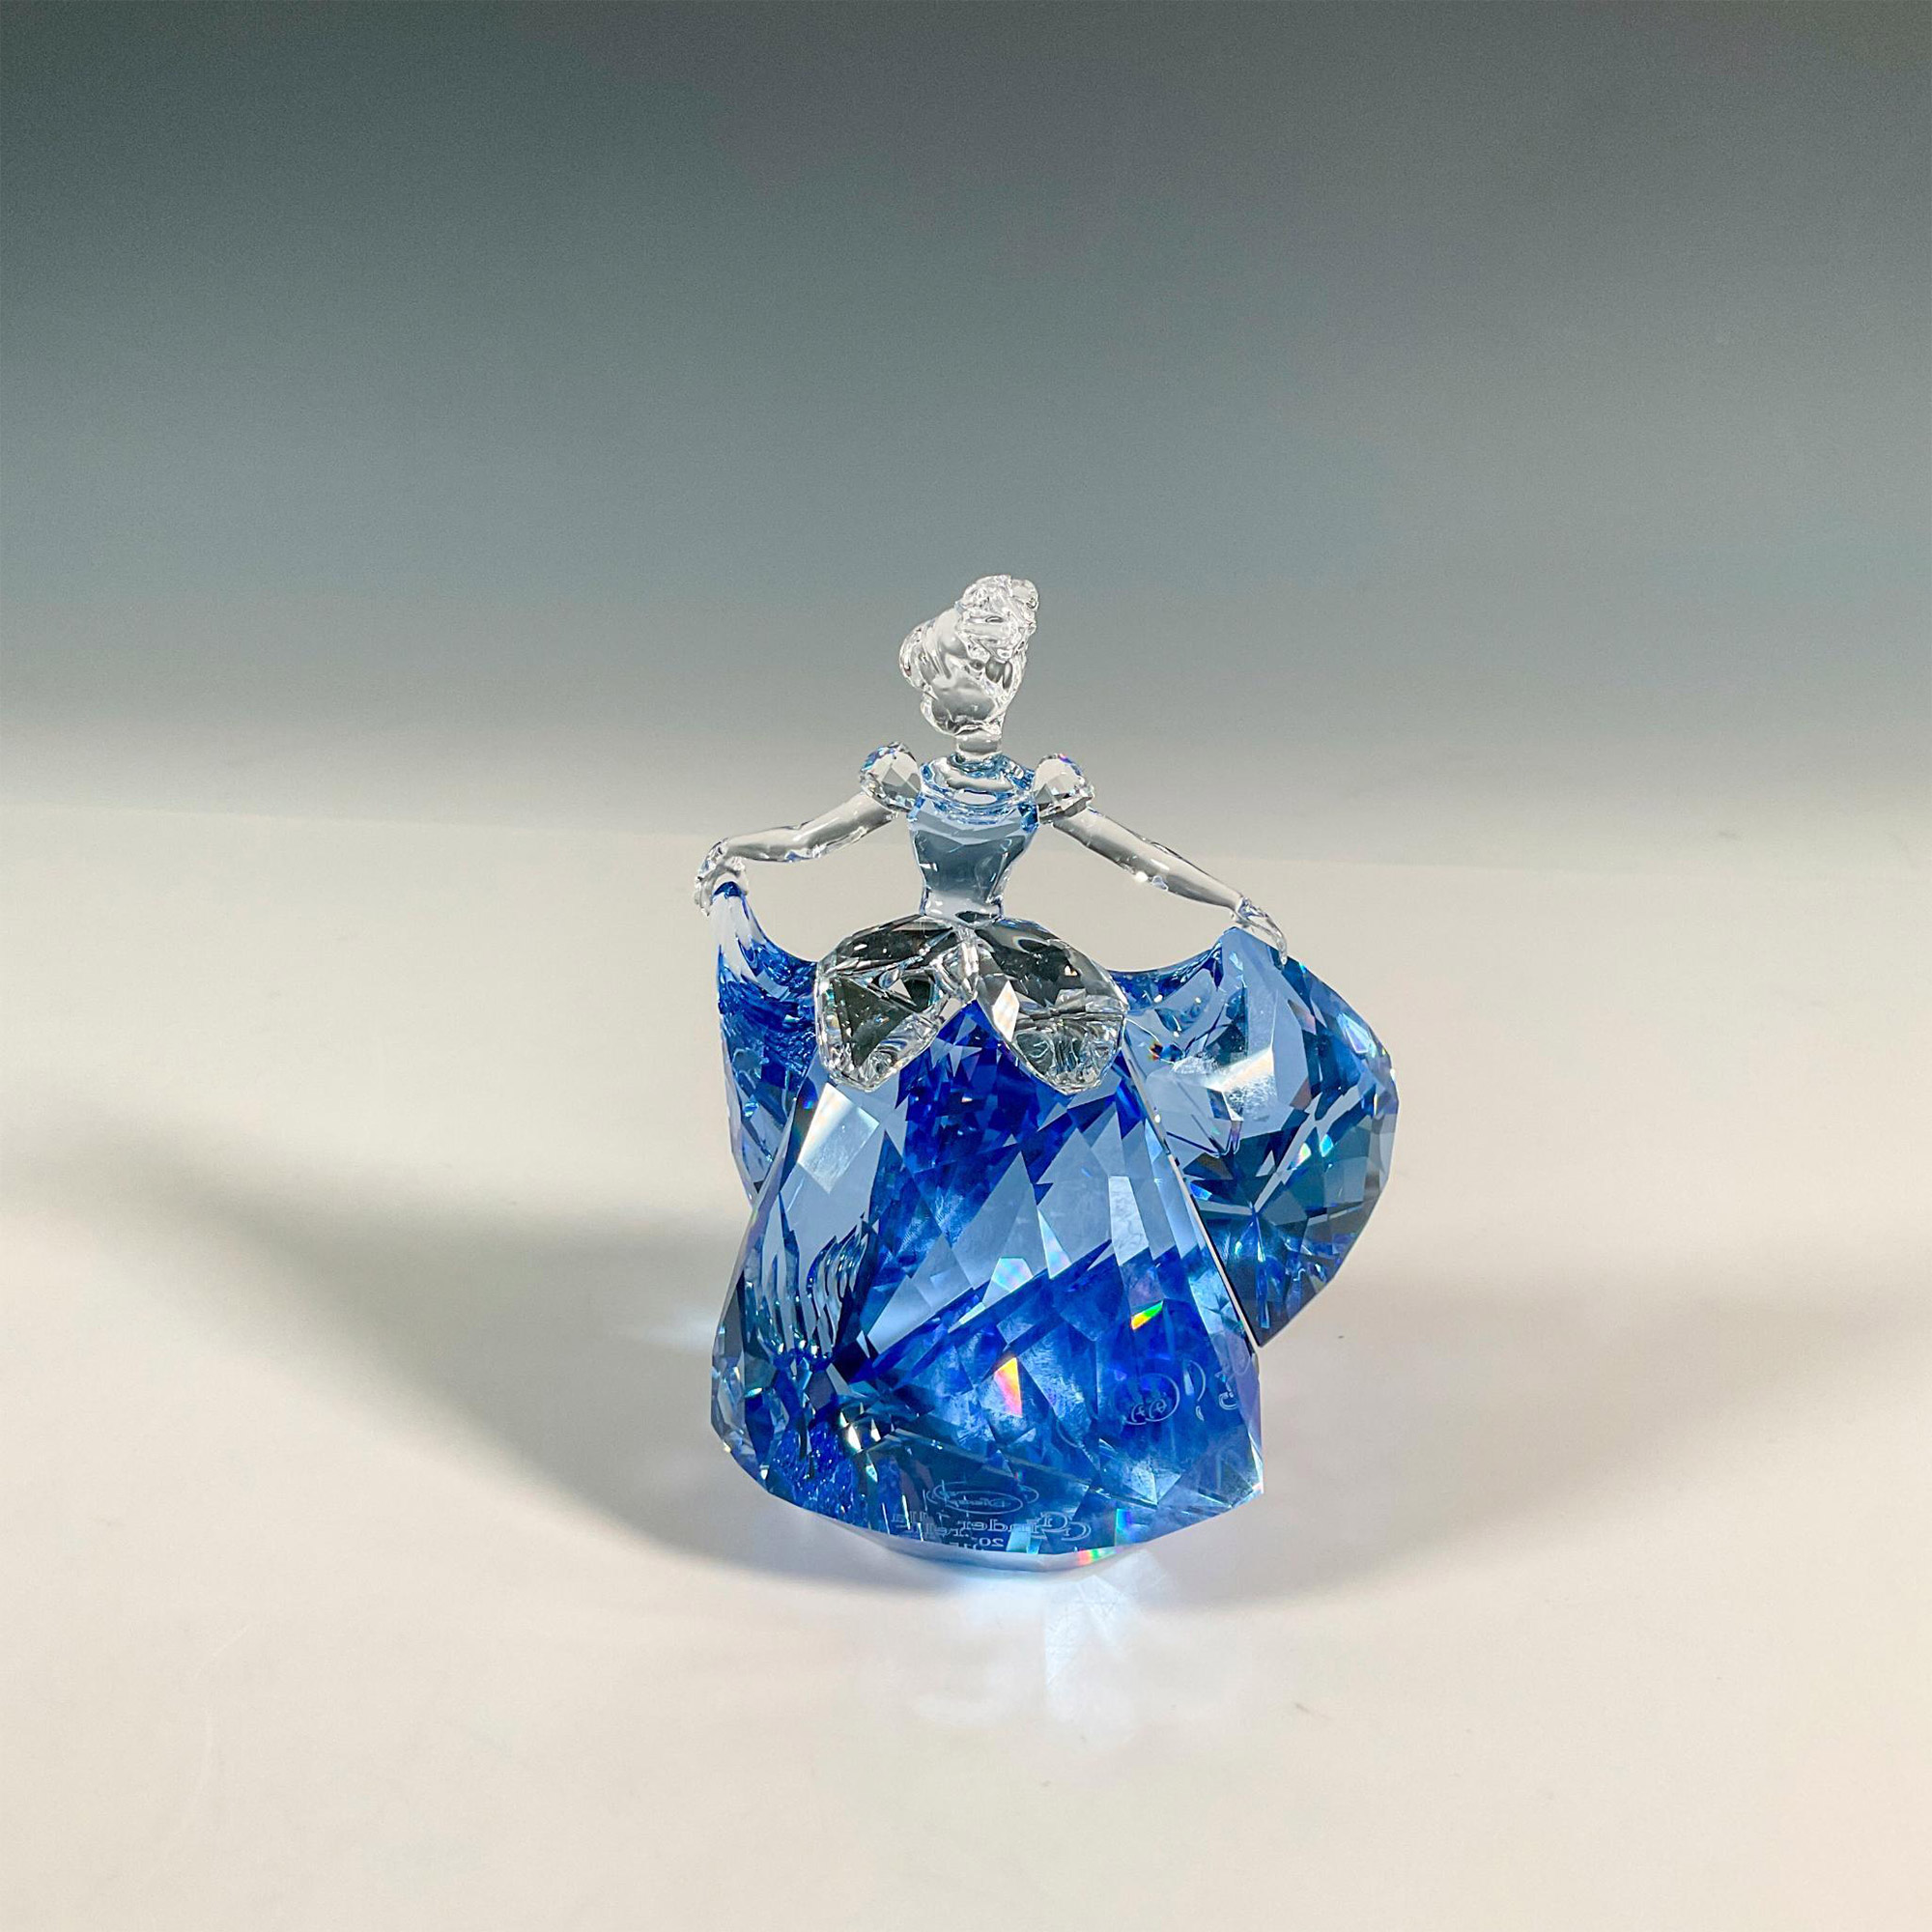 Swarovski Crystal Figurine, Cinderella Limited Edition - Image 2 of 4